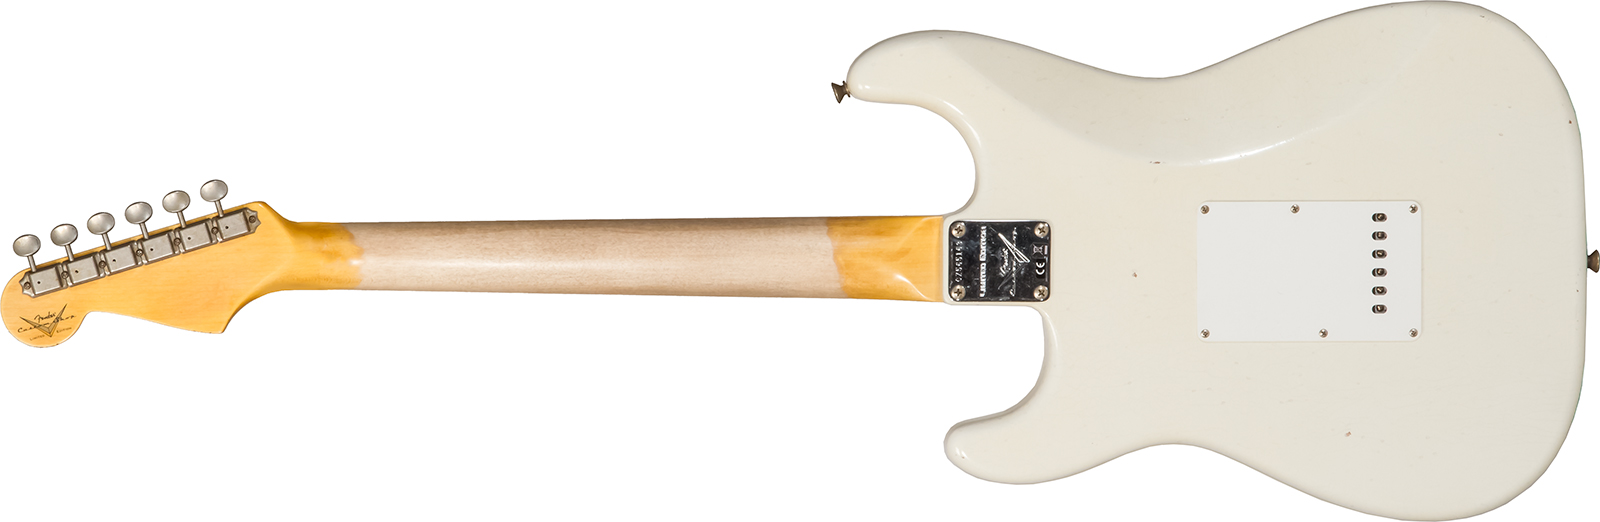 Fender Custom Shop Strat 1962/63 3s Trem Rw #cz565163 - Journeyman Relic Olympic White - Str shape electric guitar - Variation 1